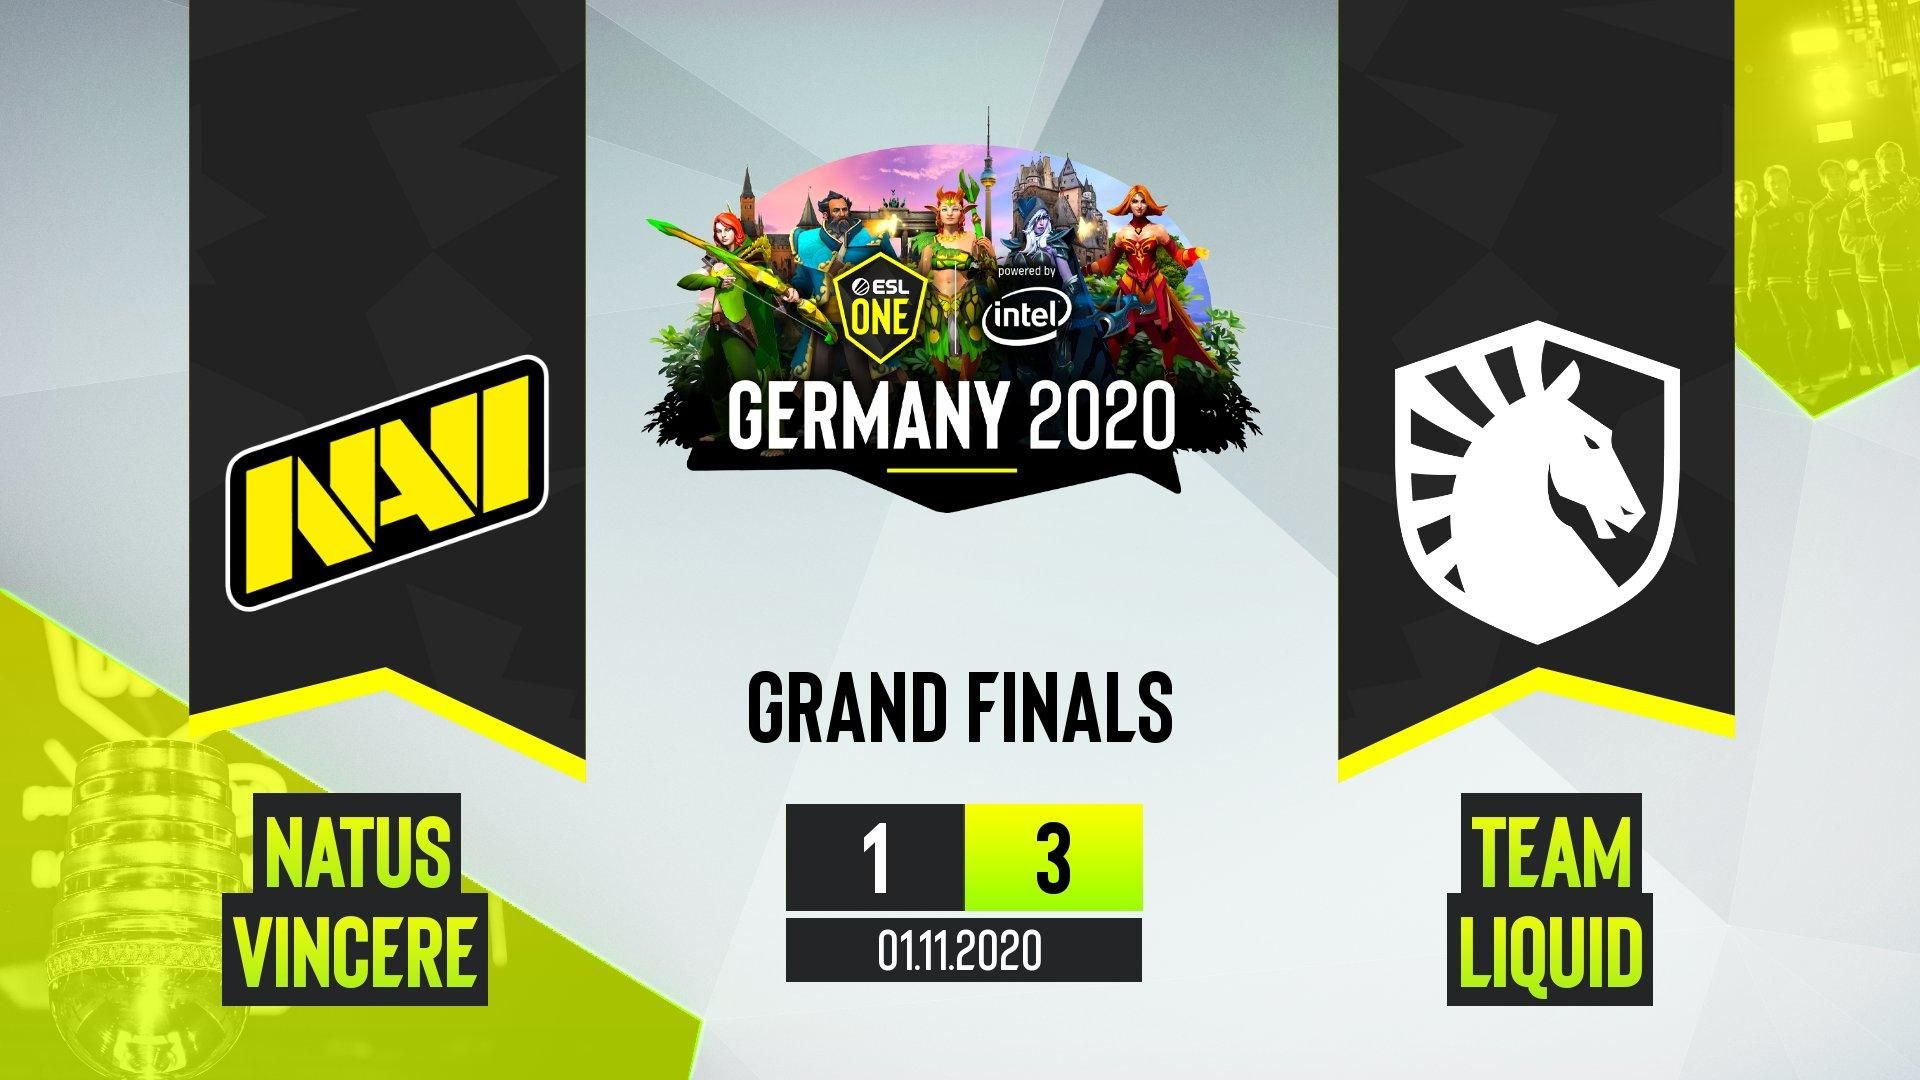 Украинская команда проиграла в гранд-финале ESL One Germany 2020 команде Team Liquid со счетом 1:3